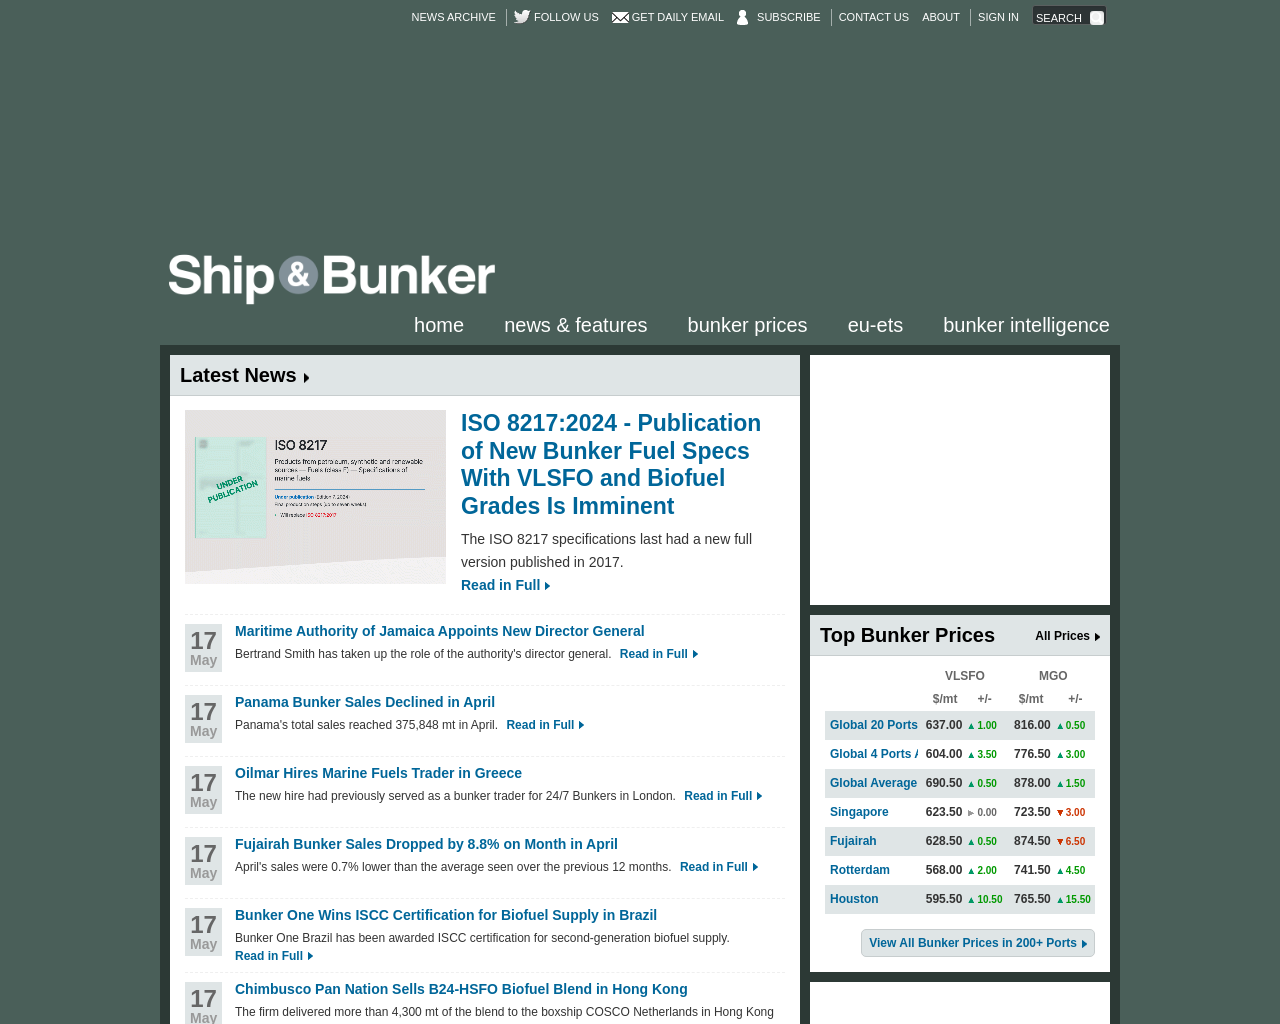 shipandbunker.com